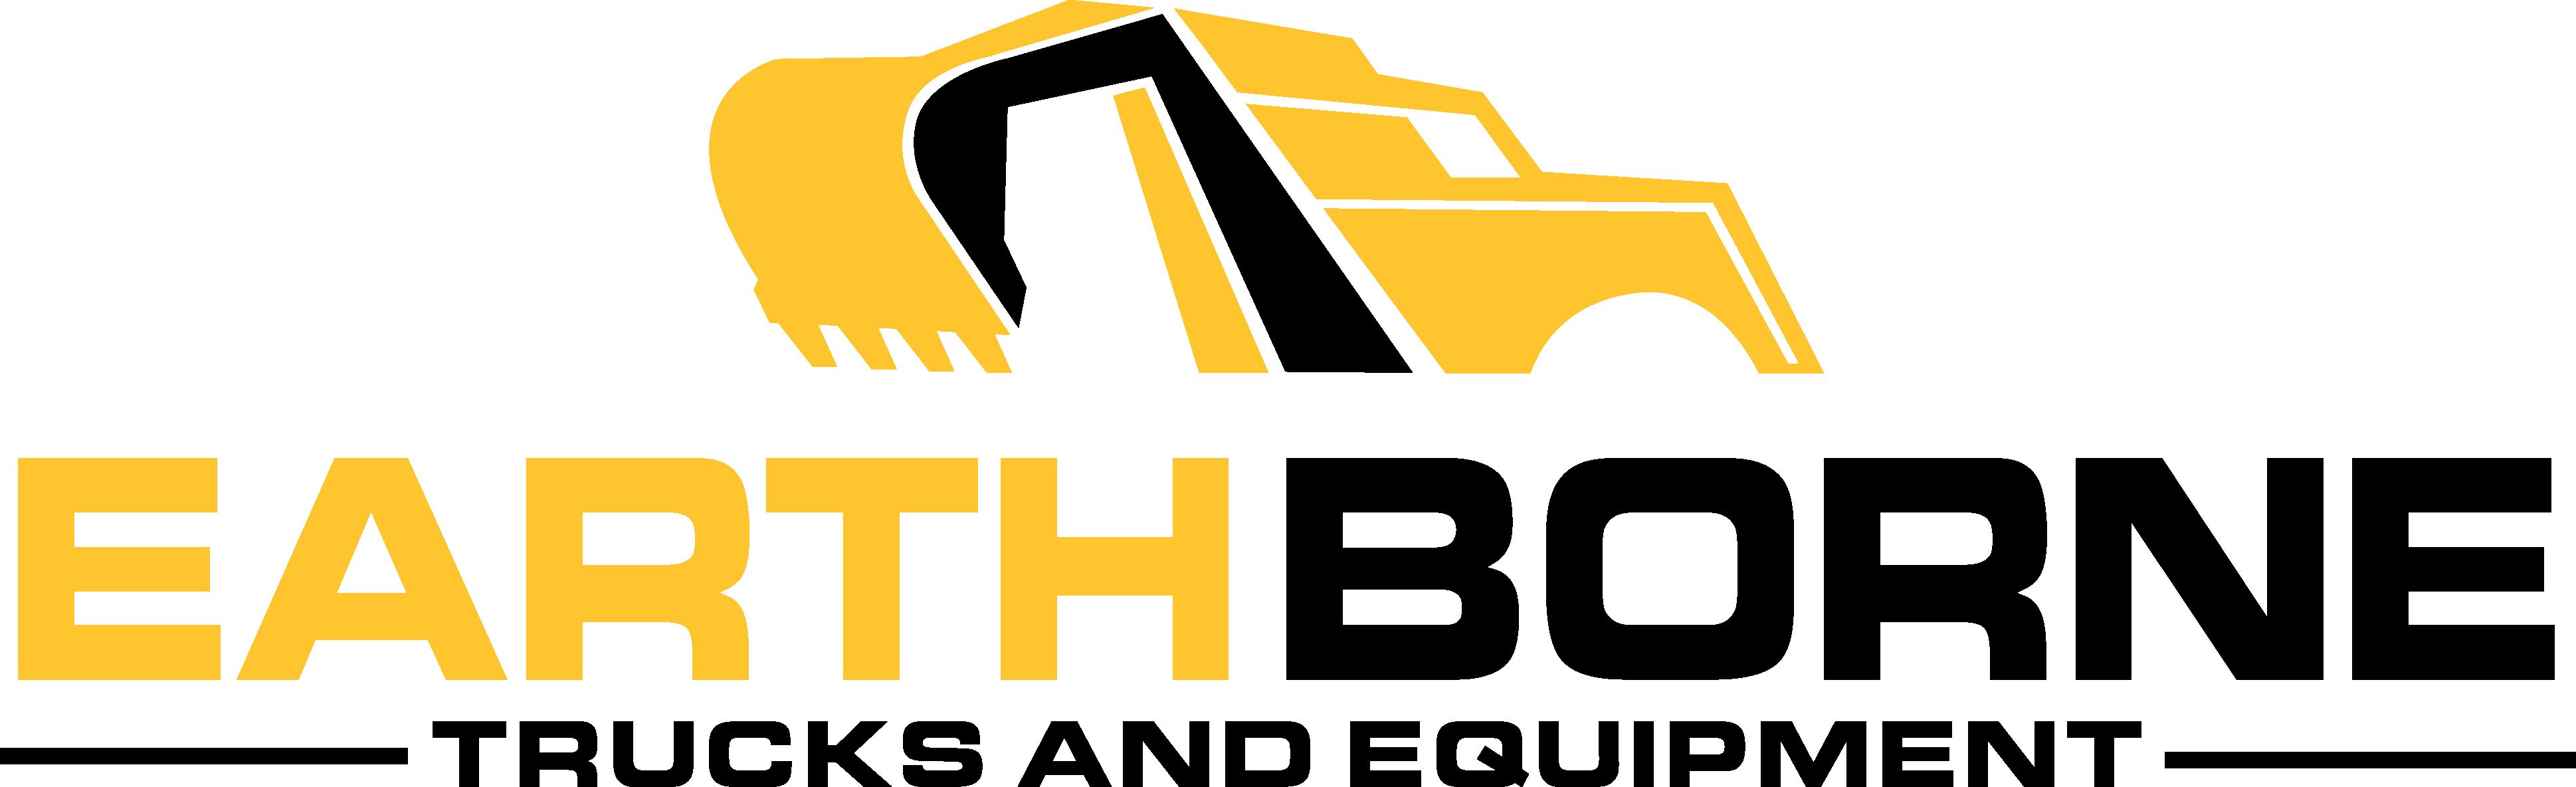 Earthborne Inc. company logo